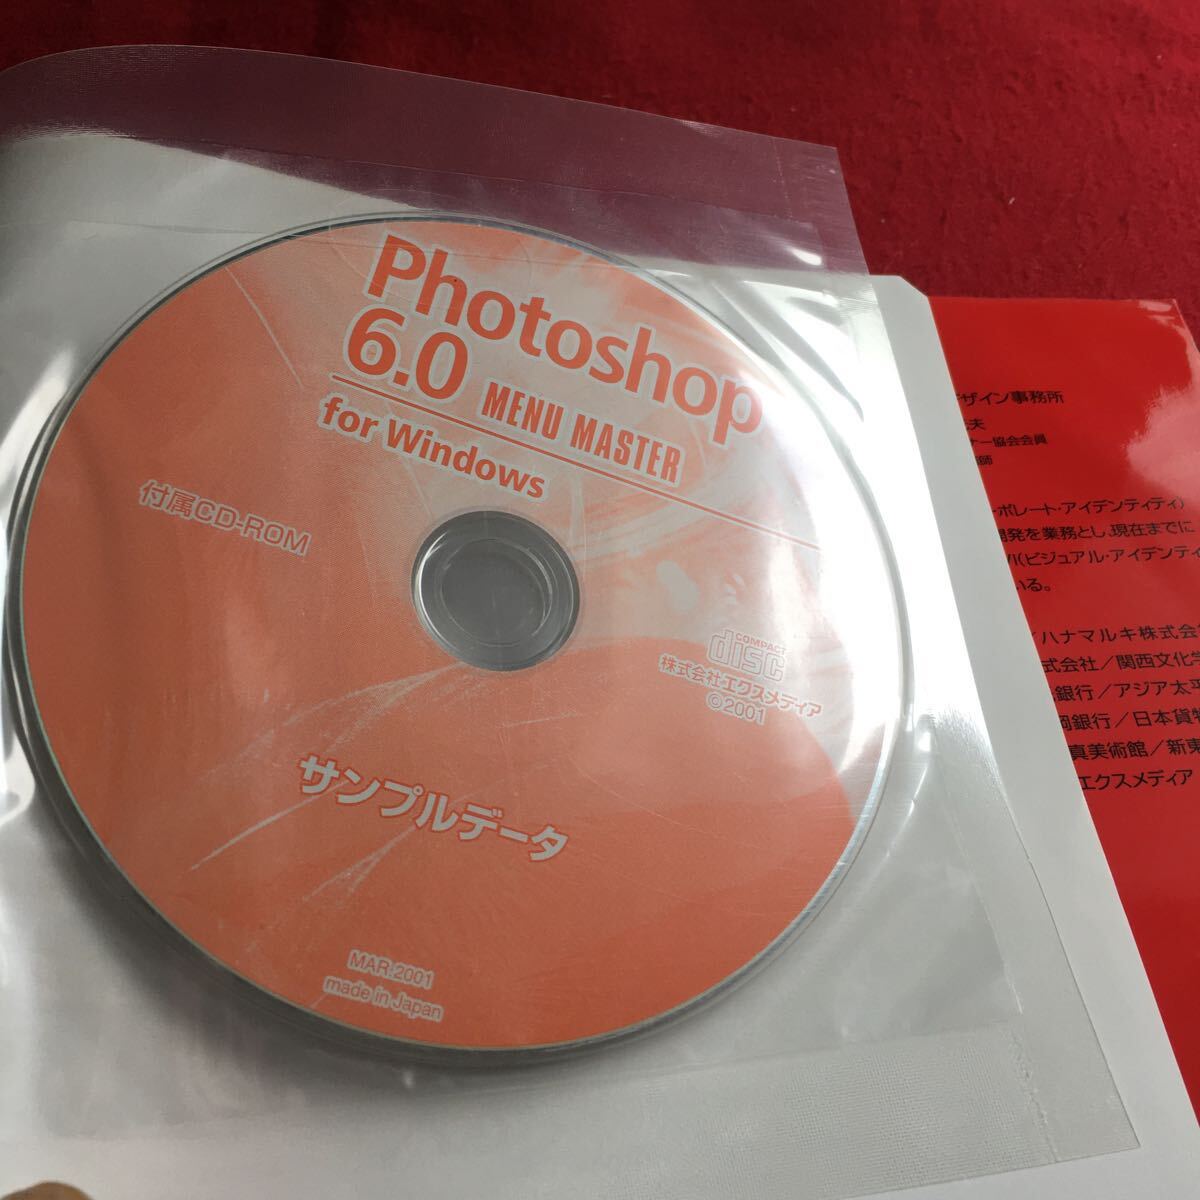 i-603 photo shop 6.0 MENU MASTER for Windows エクスメディア※10_付属 CD-ROM